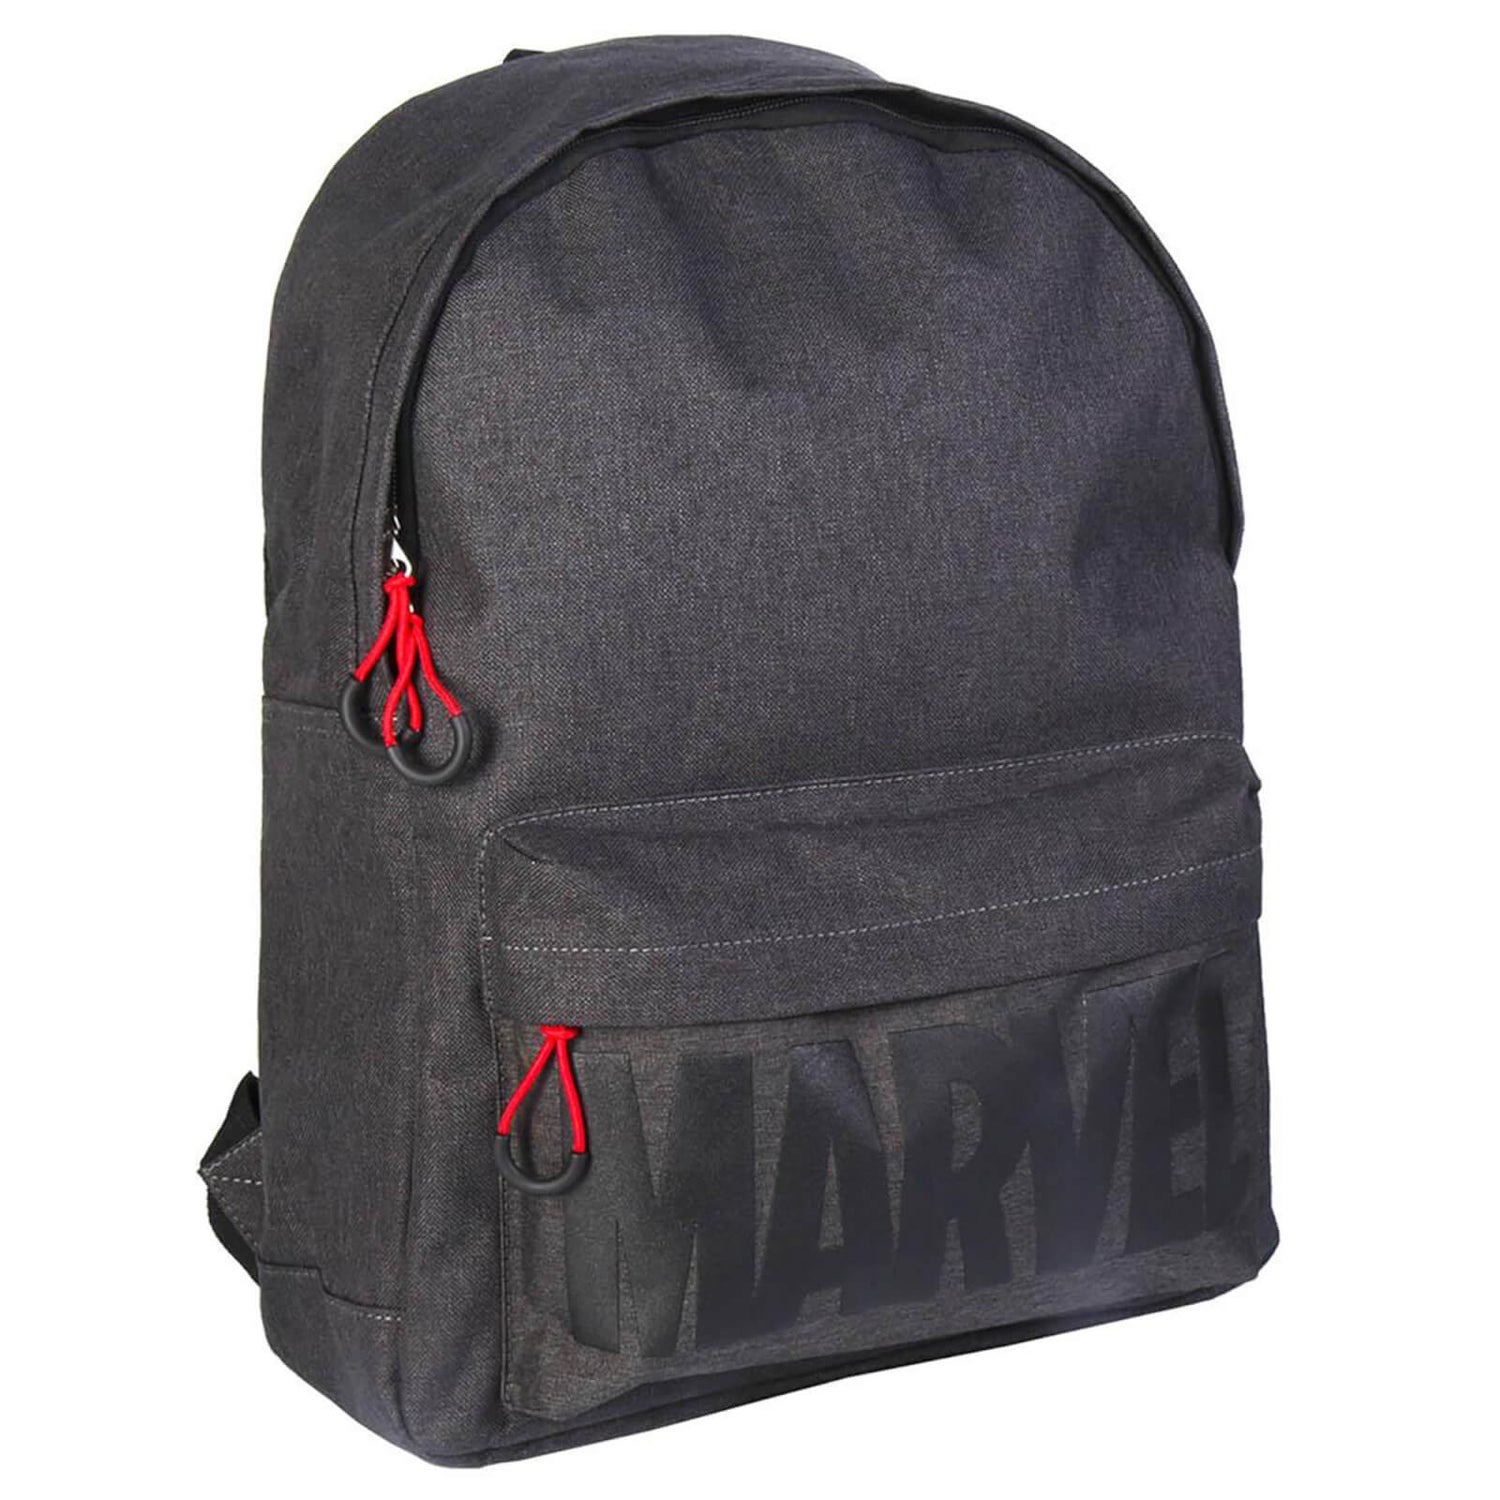 Marvel Classic Logo Backpack- Black